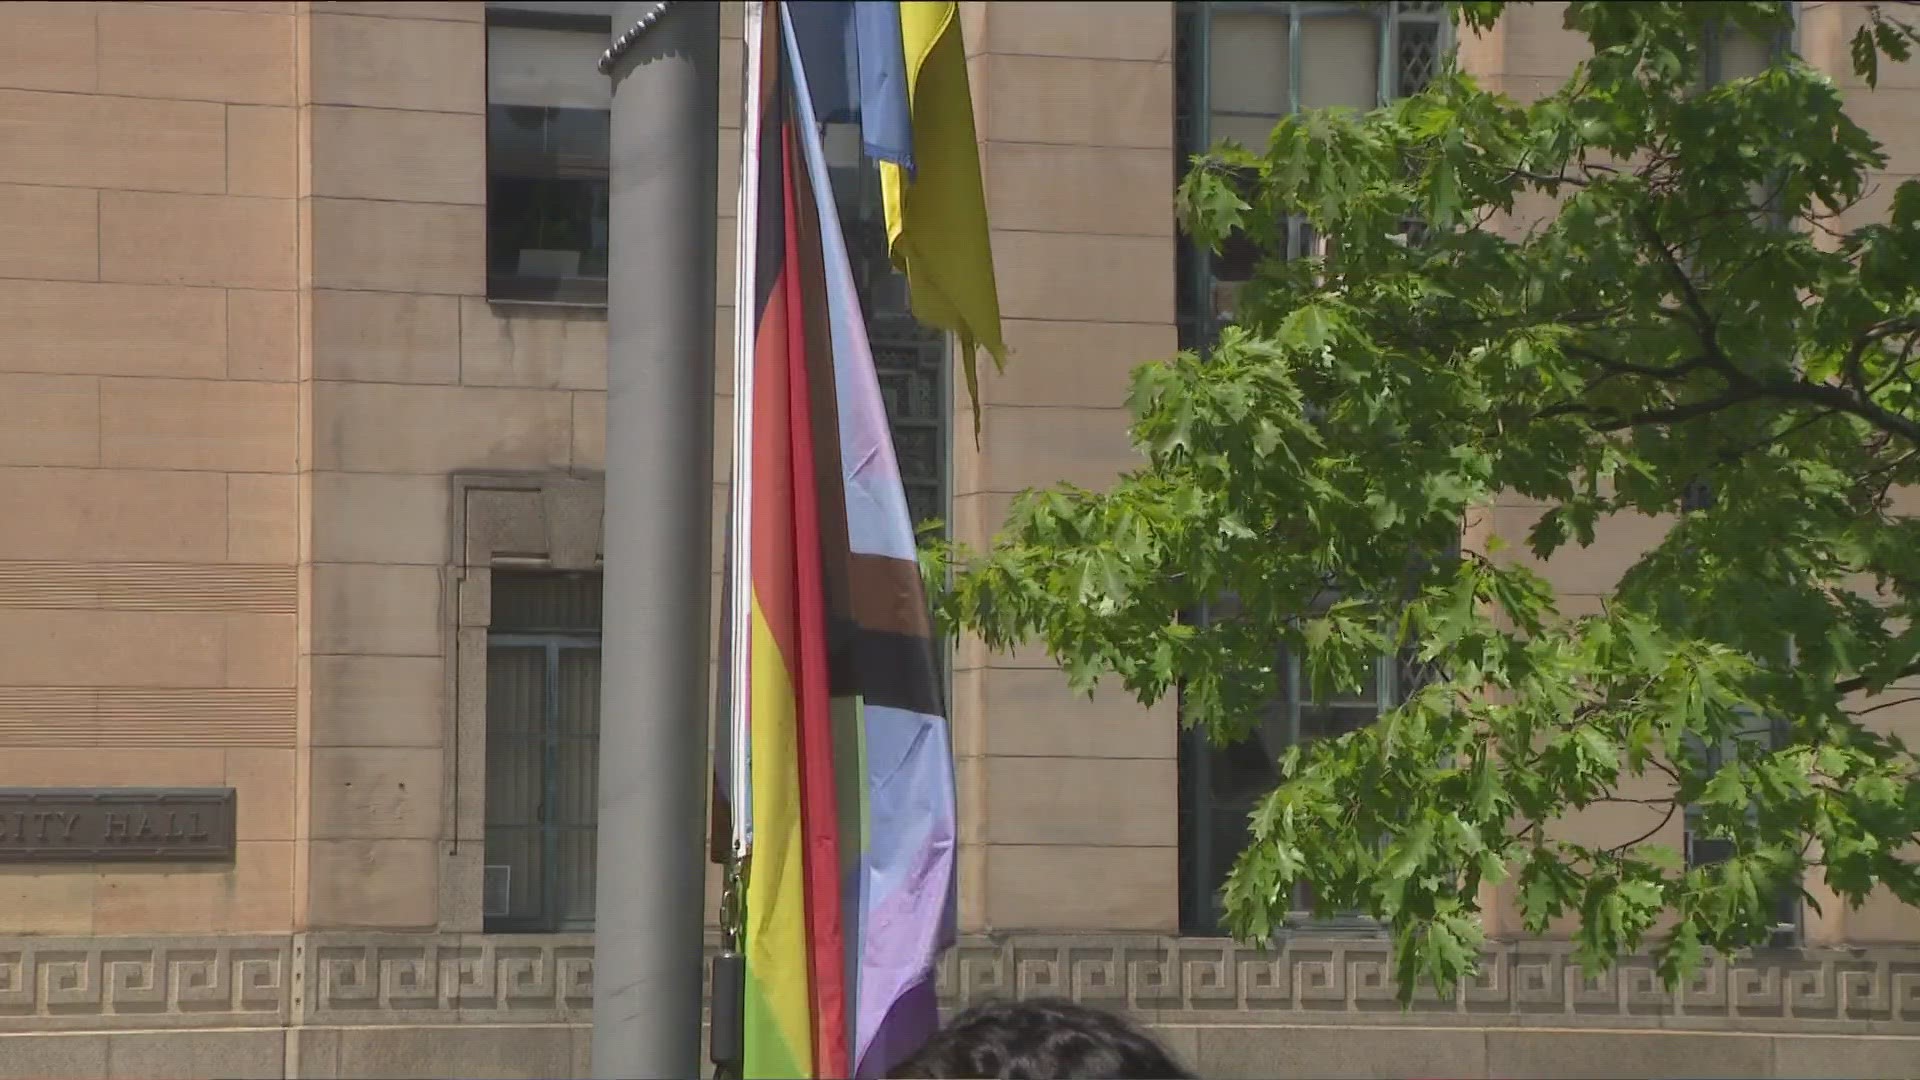 Today the city of Buffalo raised the "Progress Pride" flag in Niagara Square